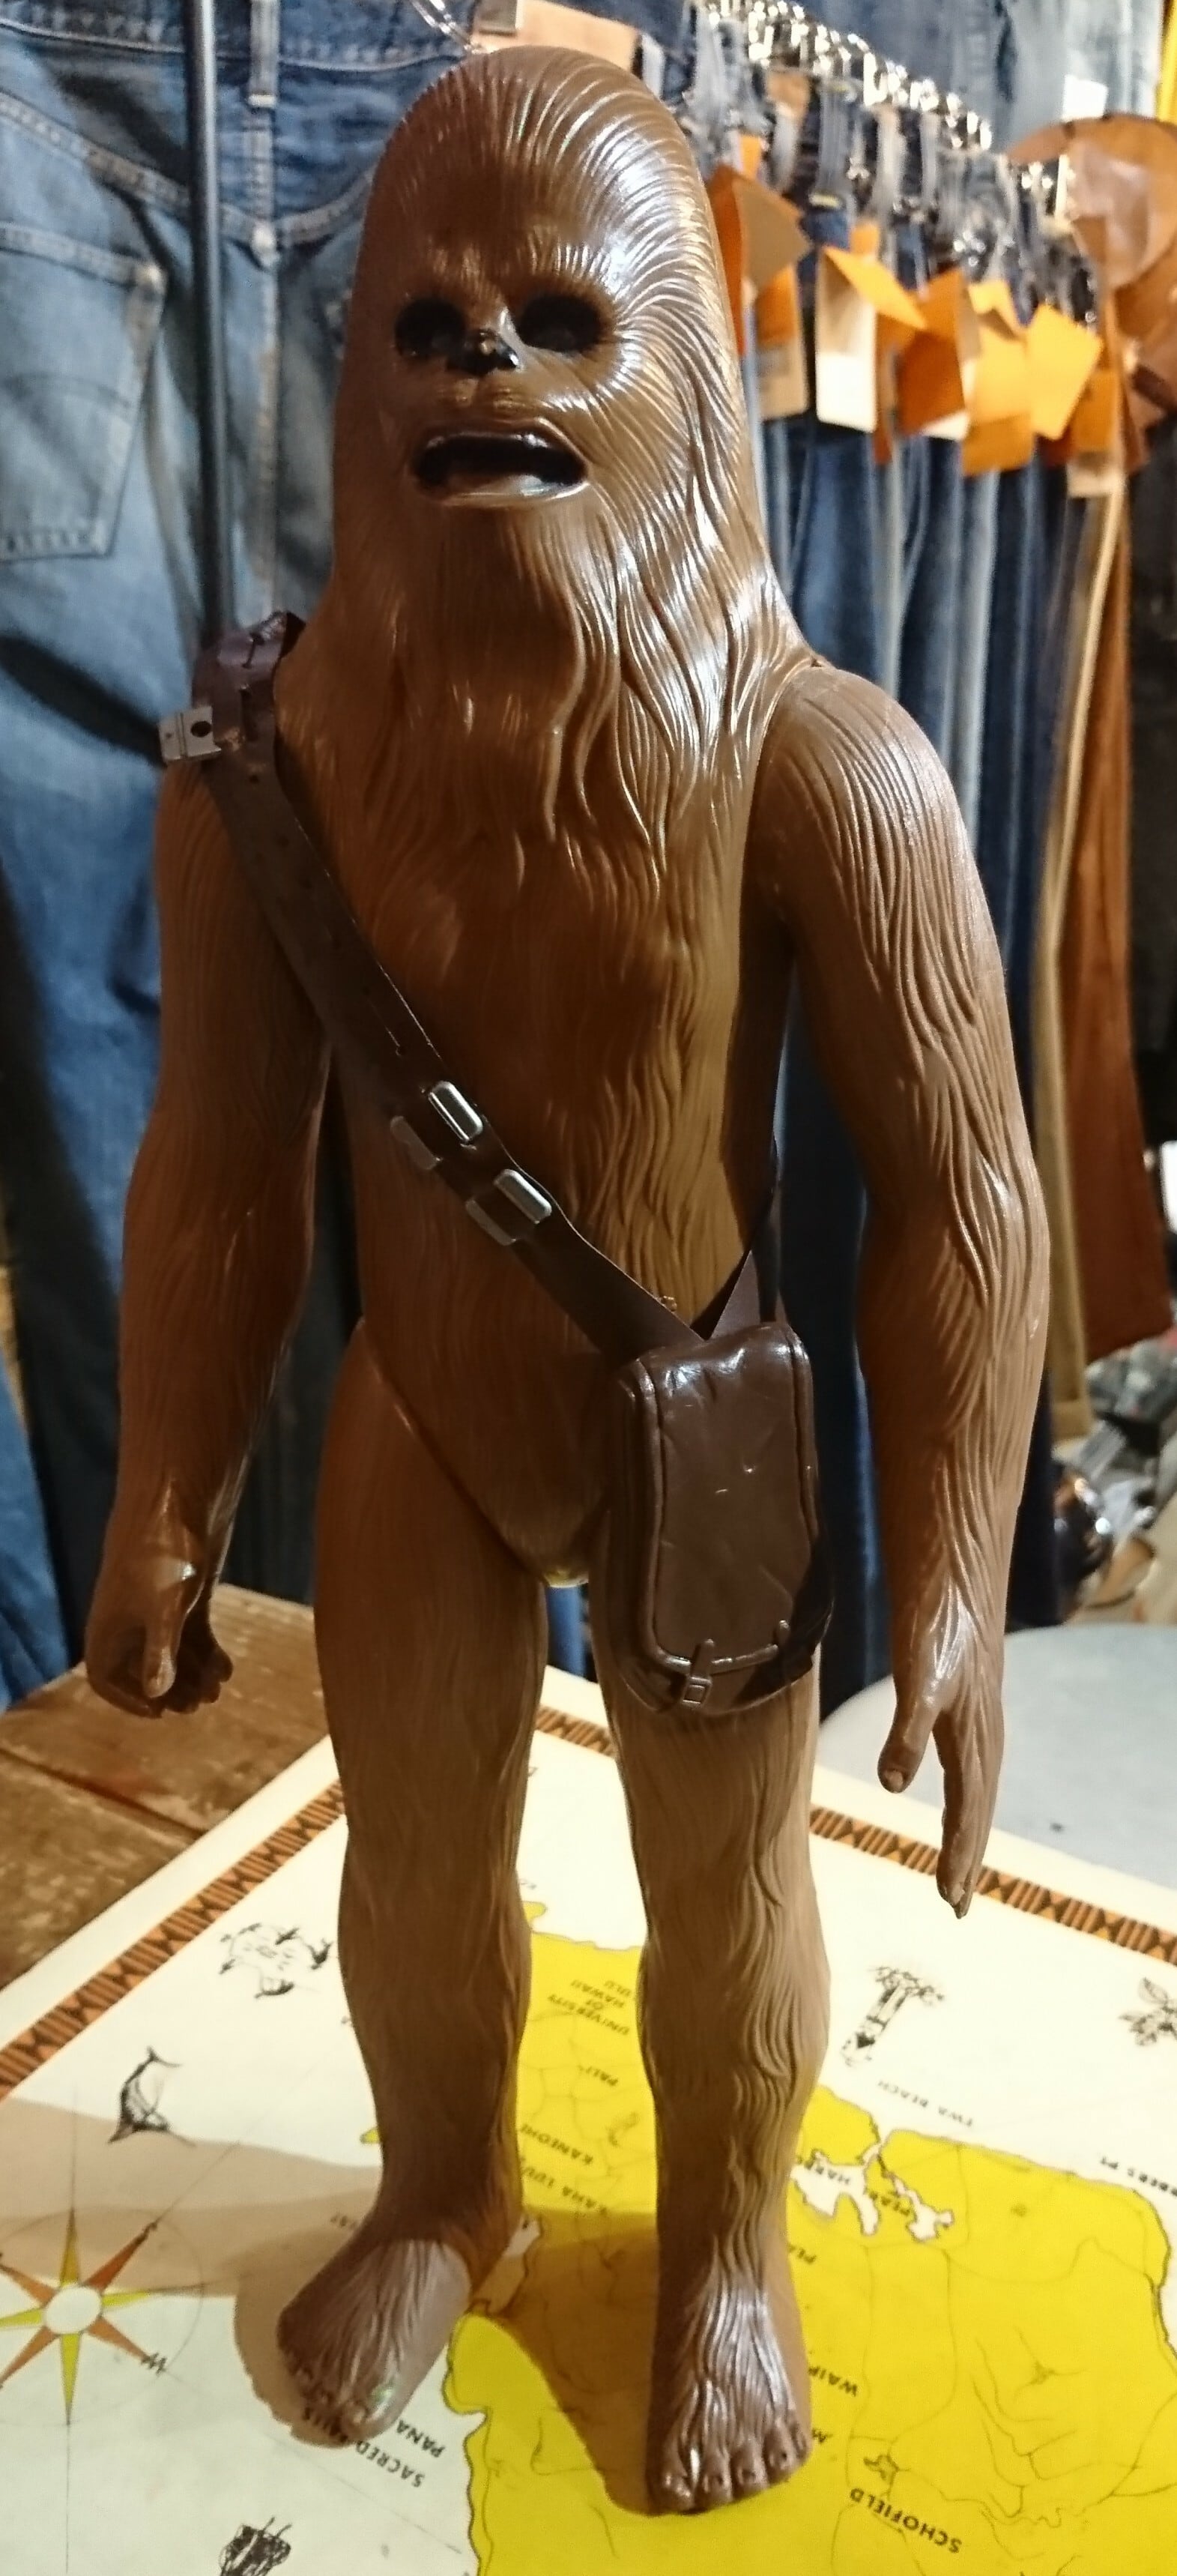 70s vintage starwars chewbacca figure old kenner gmfgi